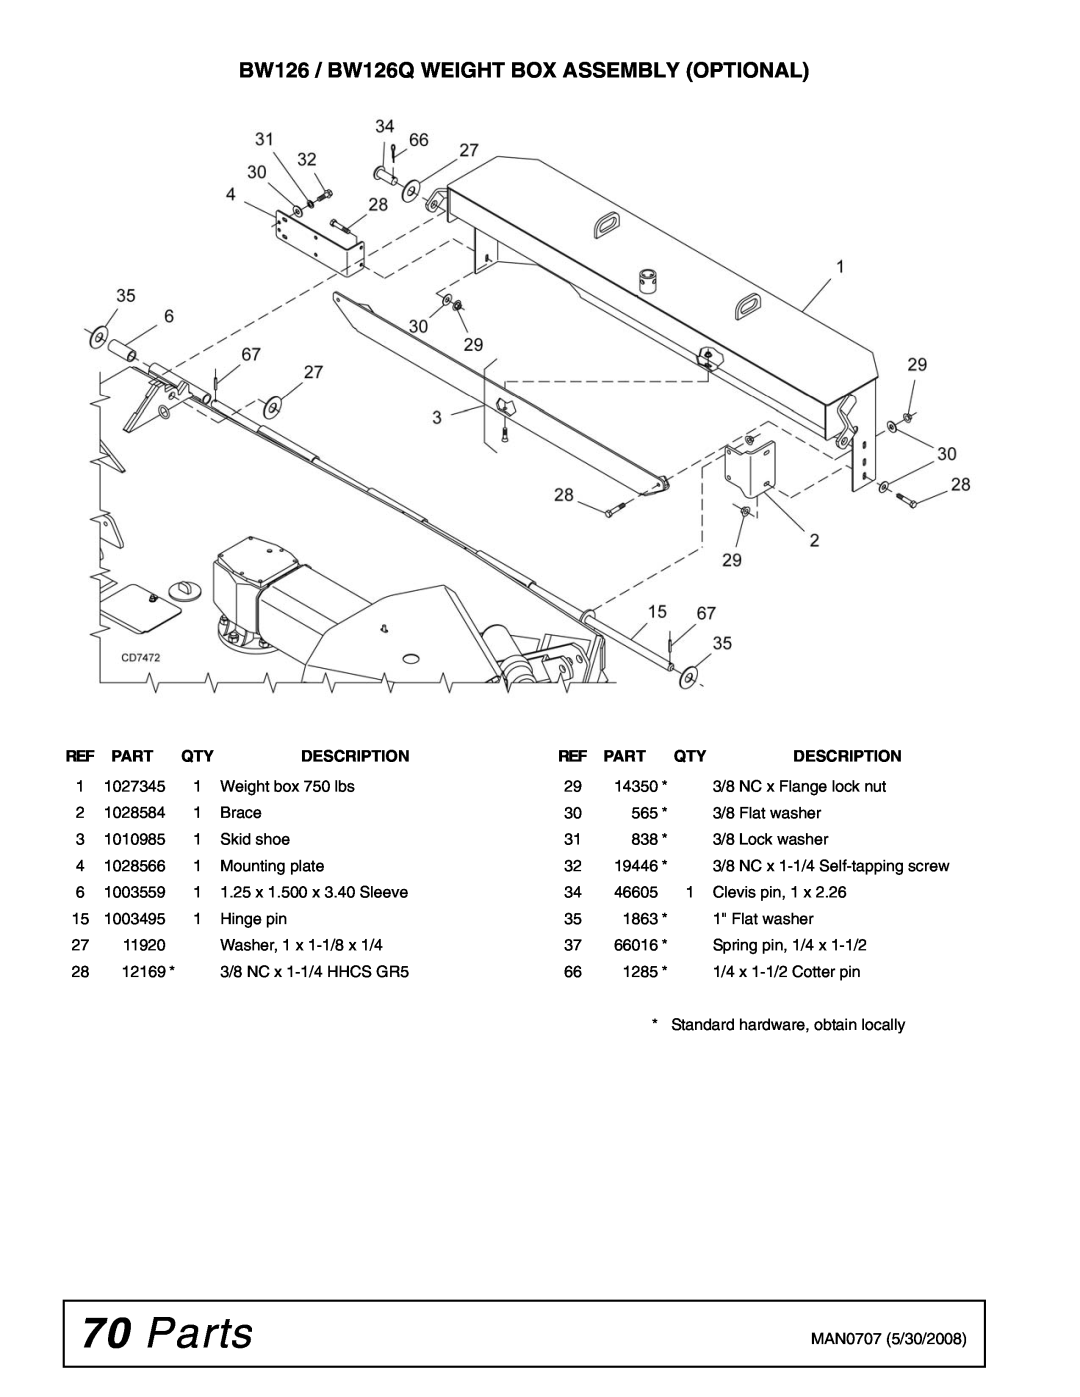 Woods Equipment BW126Q-3, BW180Q-3, BW126-3, BW180-3 manual Parts, BW126 / BW126Q WEIGHT BOX ASSEMBLY OPTIONAL, Description 